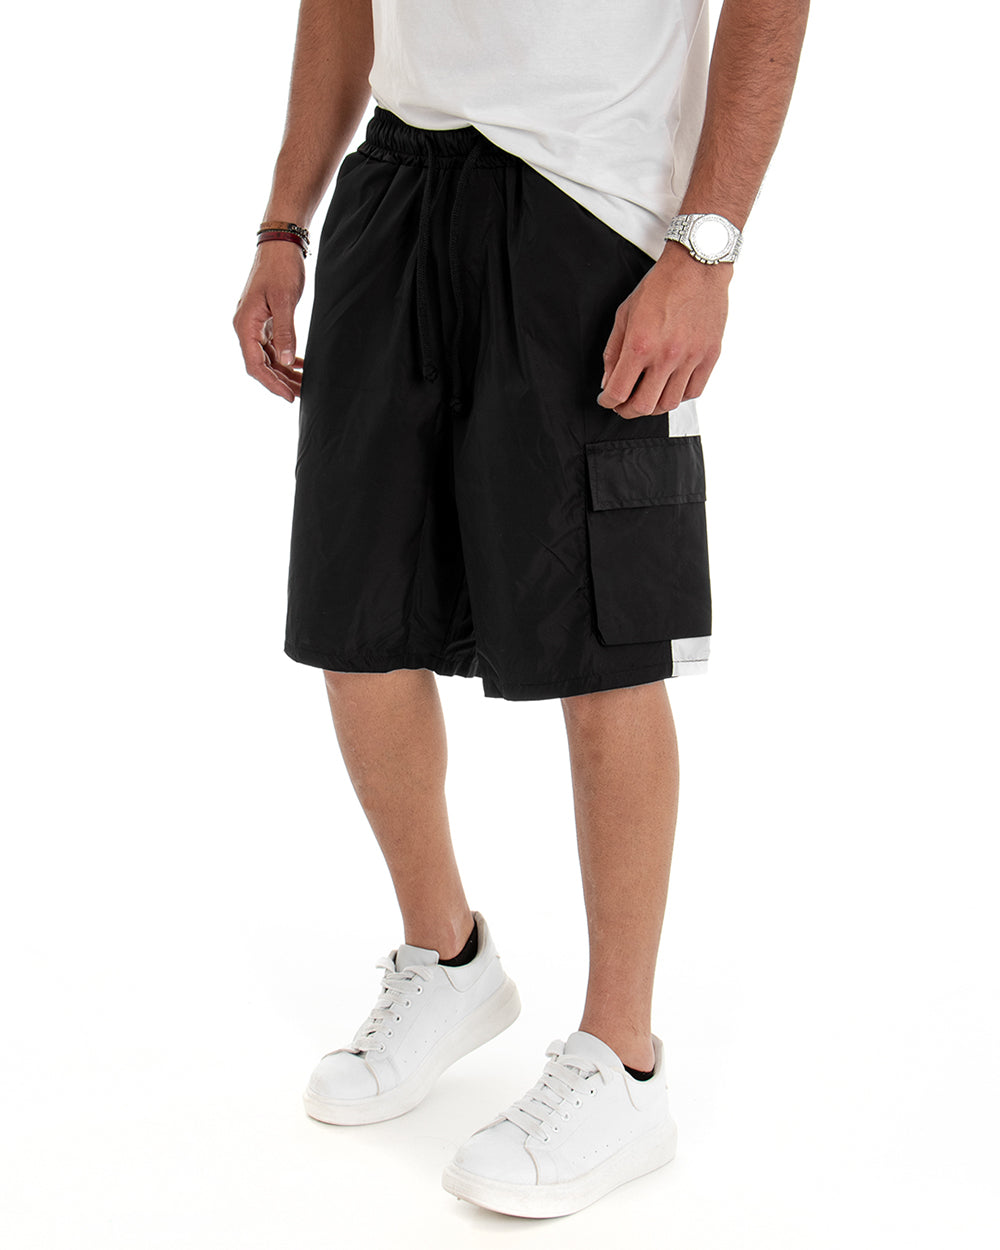 Bermuda Shorts Men Solid Color Trousers Black Stripe GIOSAL-PC1836A